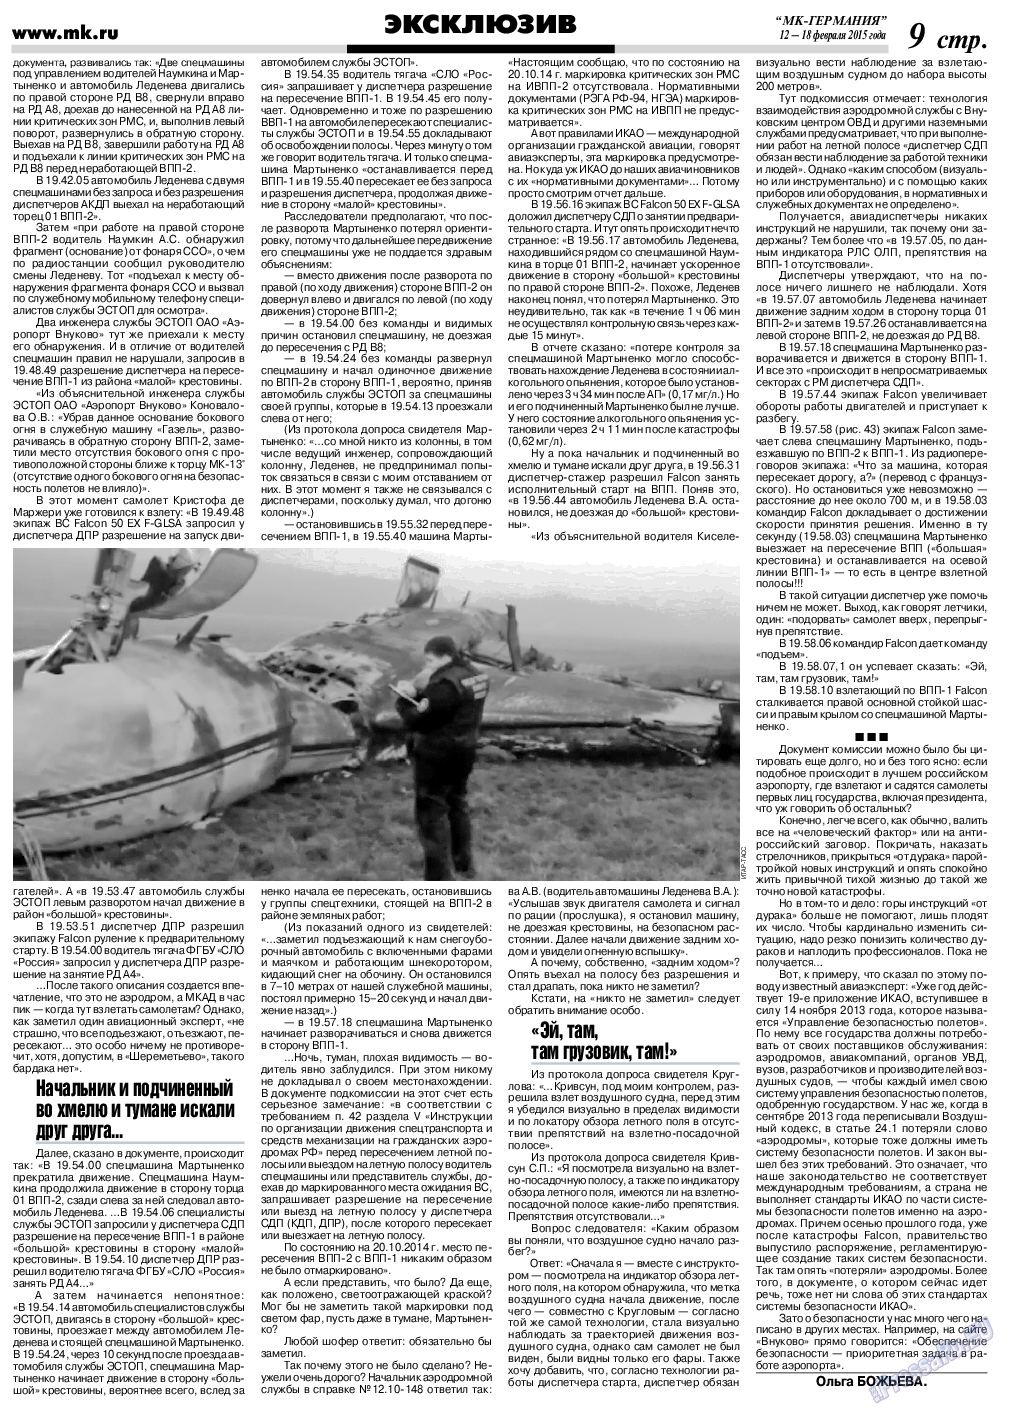 МК-Германия, газета. 2015 №7 стр.9